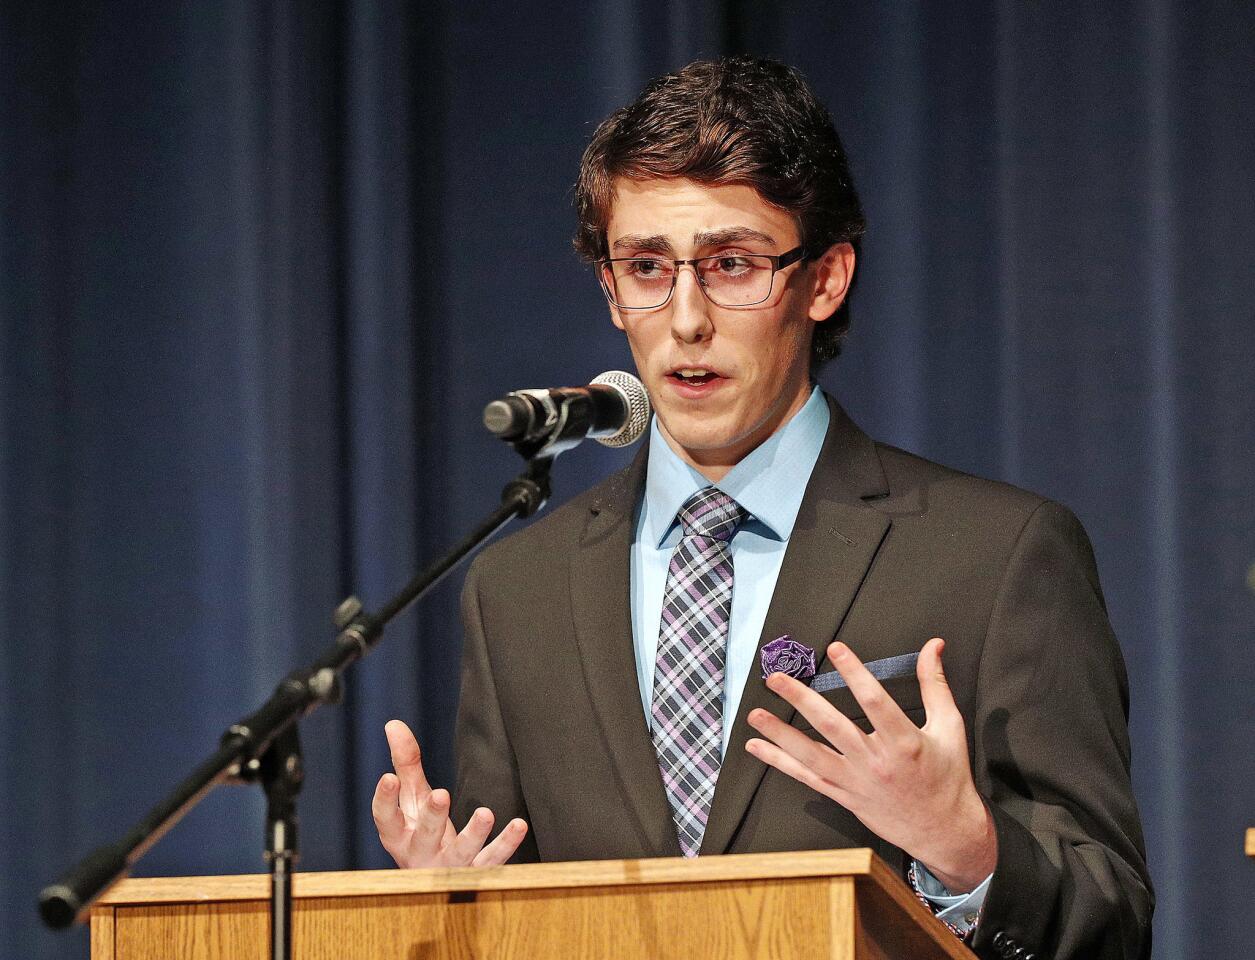 Photo Gallery: First political speech debate at Burbank High School